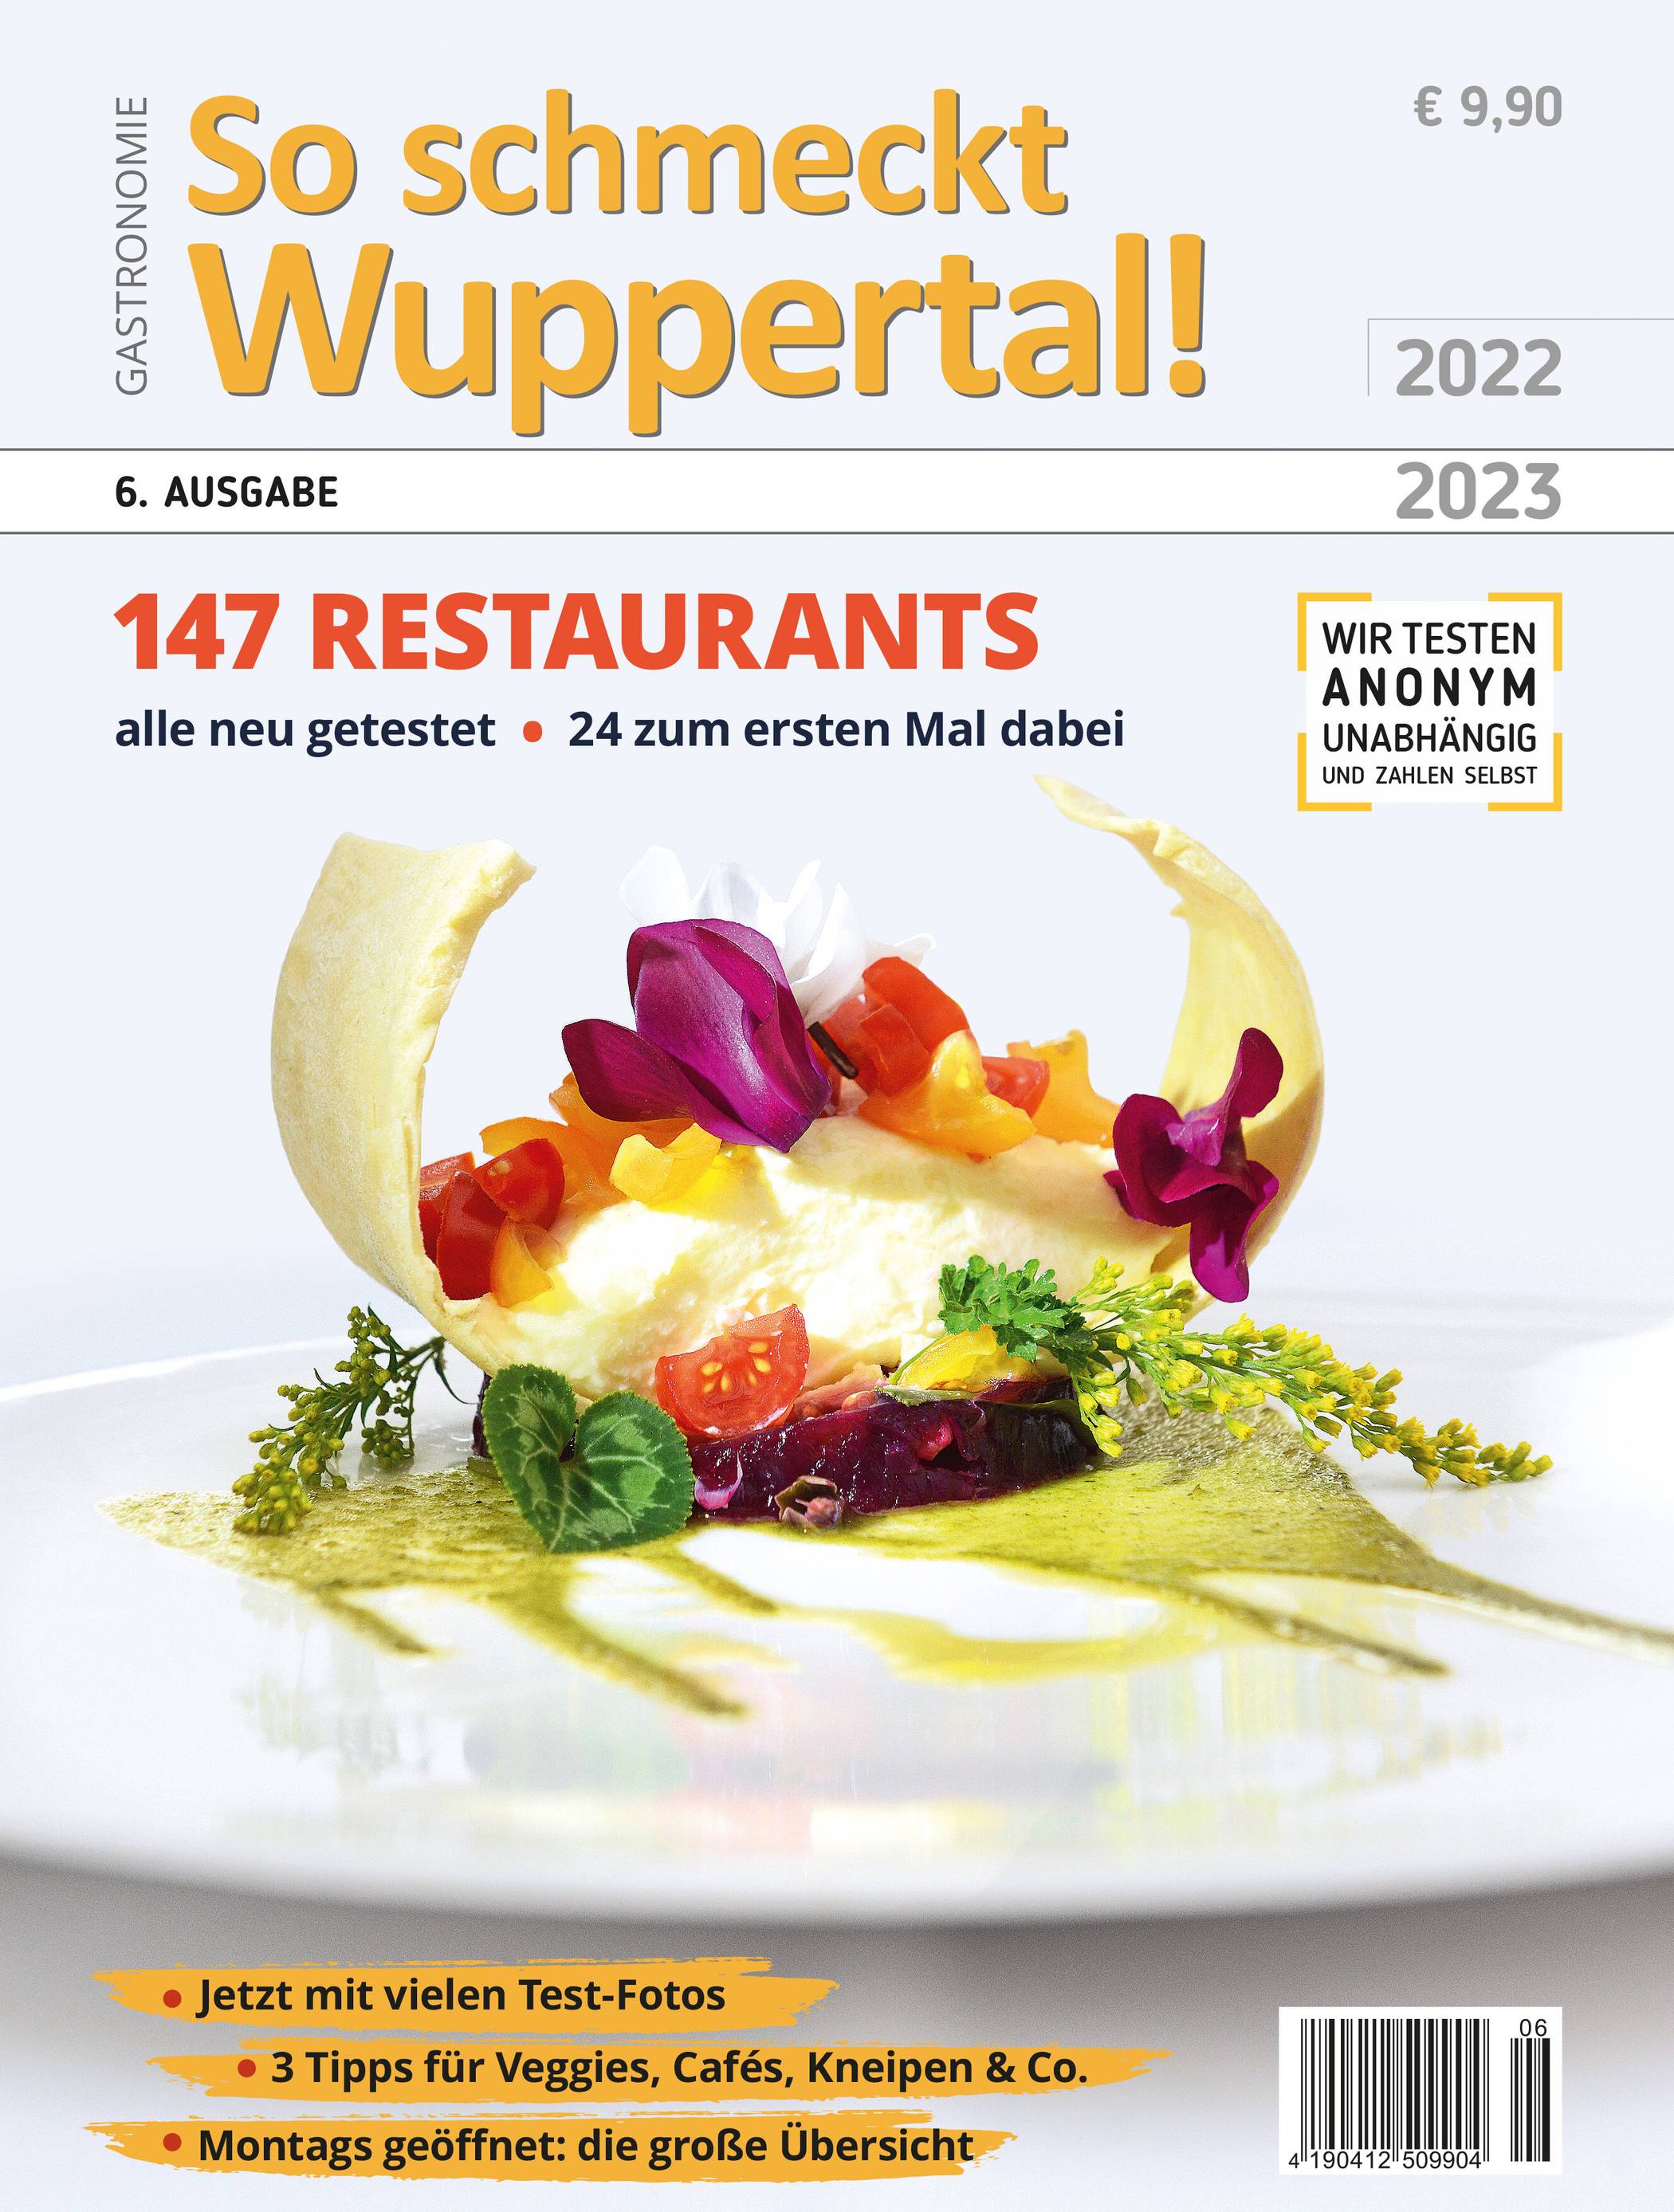 News aus Wuppertals Gastronomie​: What’s new, what’s zu?​